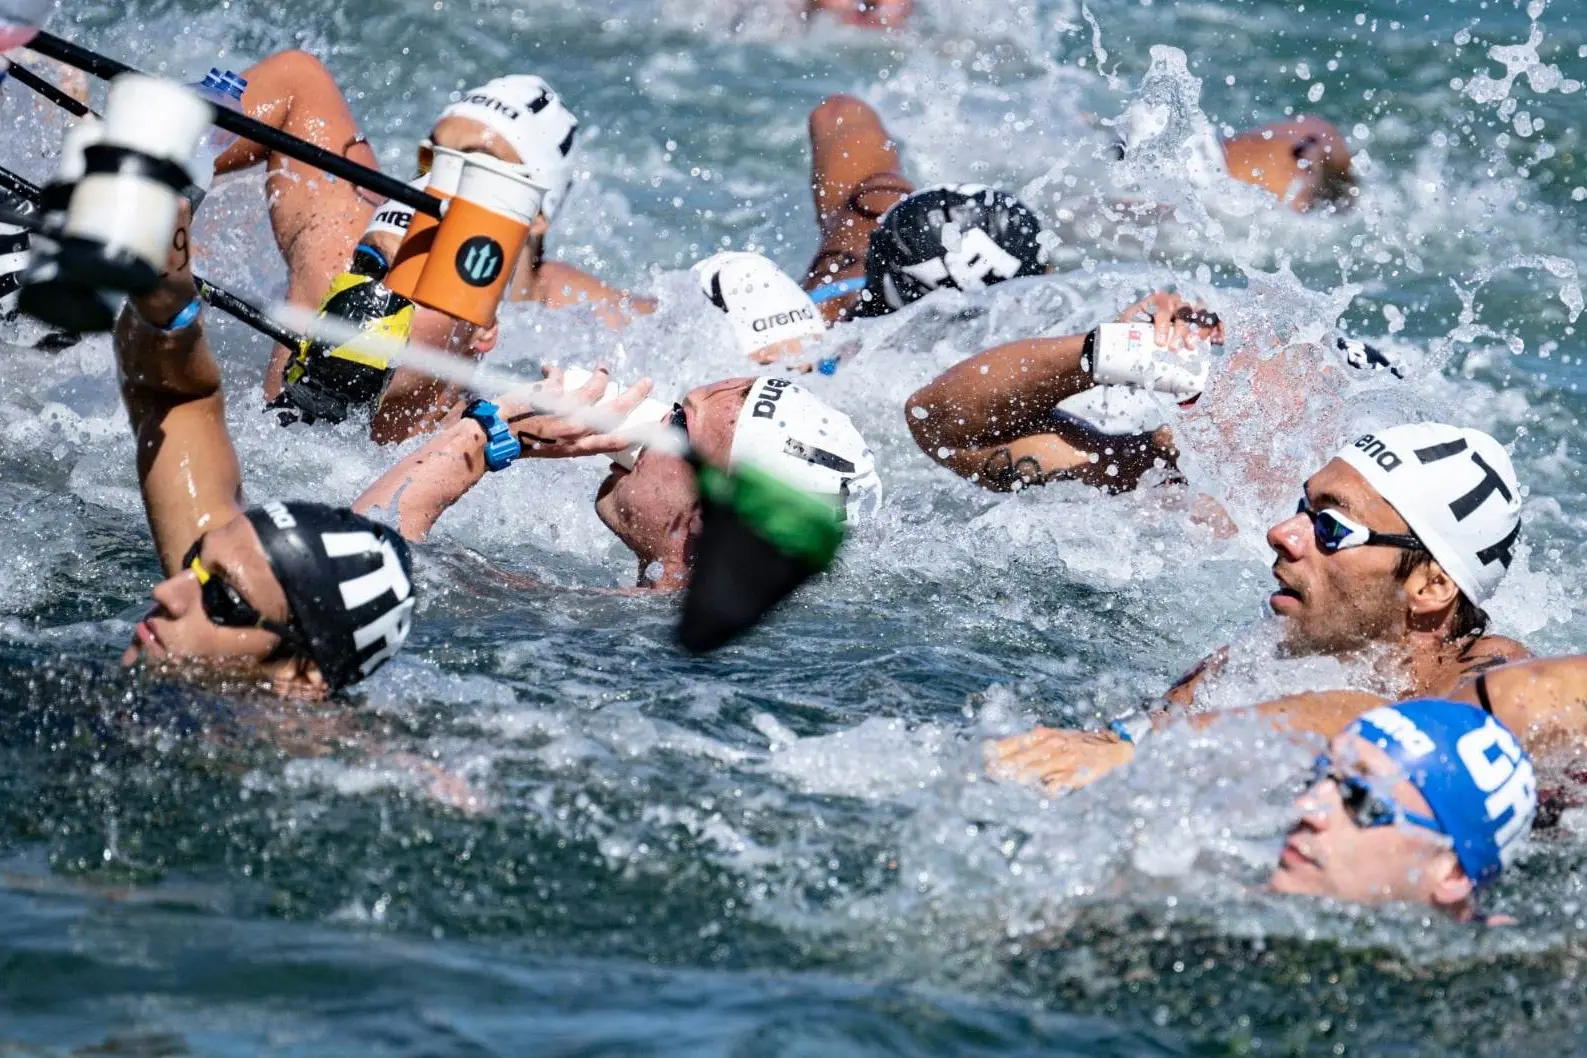 Nuotatori impegnati in una gara in acque libere (foto di Deepbluemedia Photoshelter).